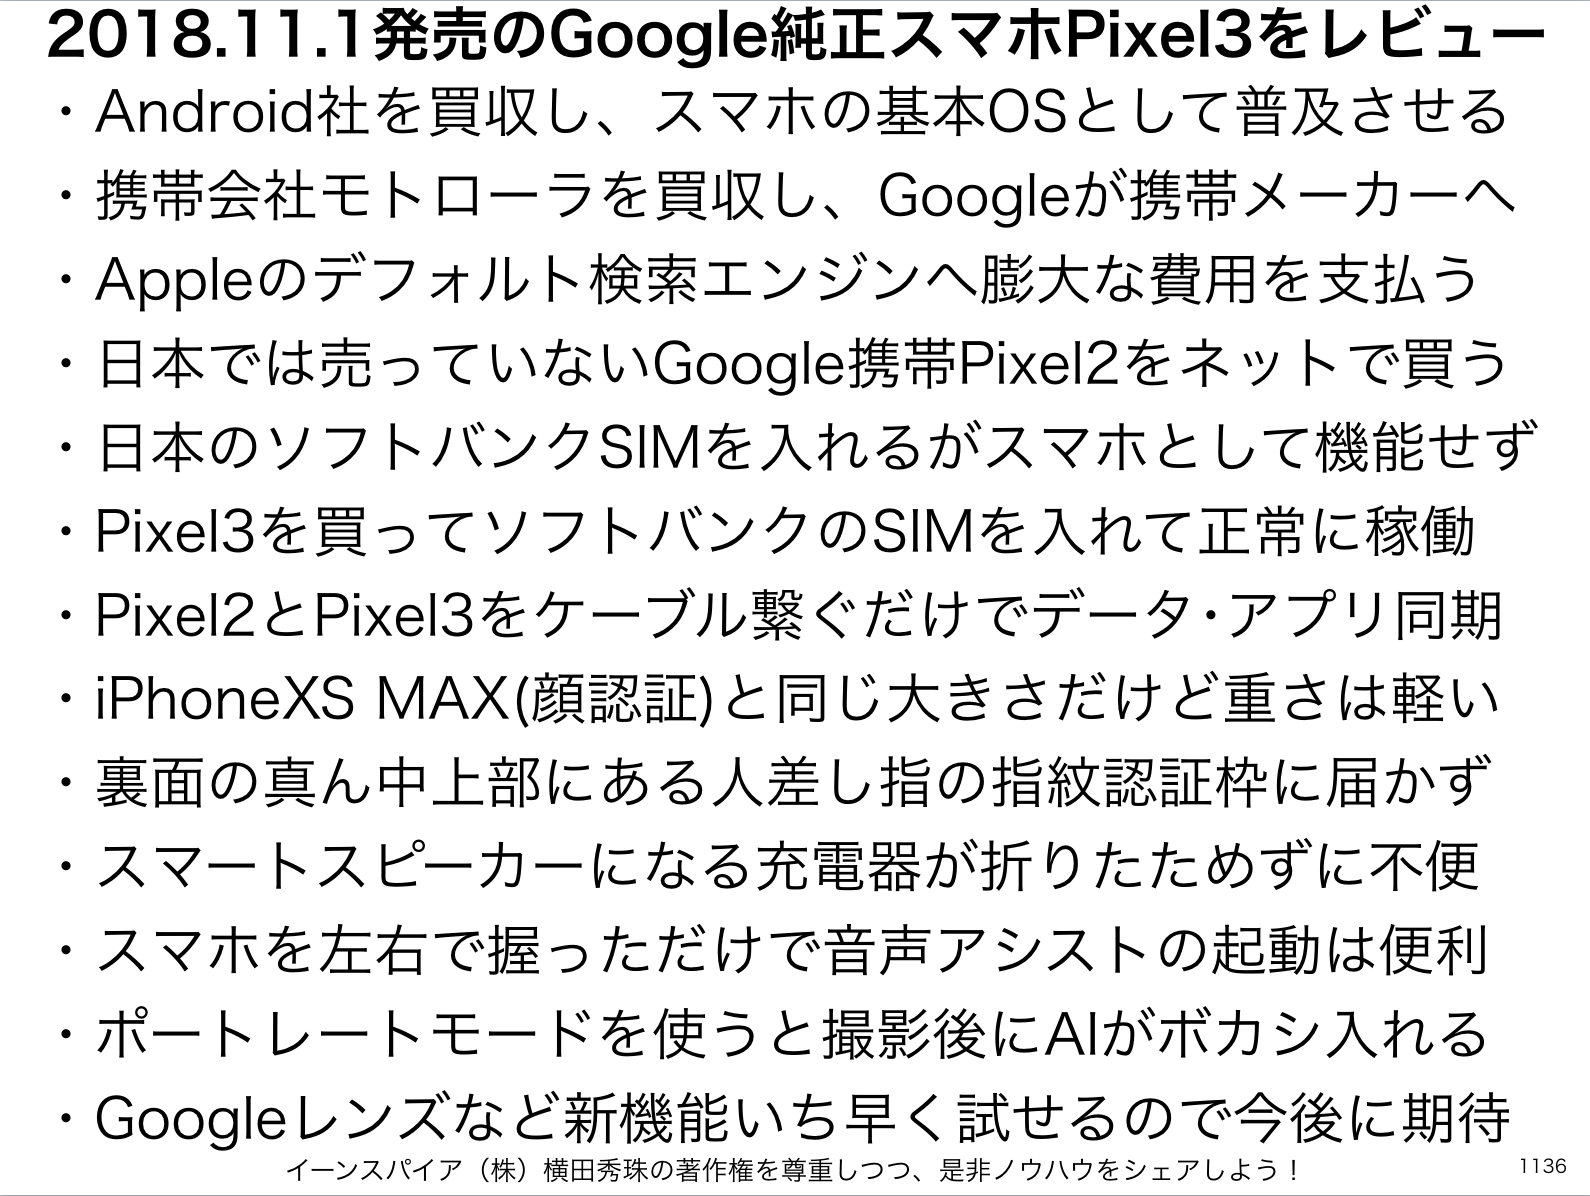 Google純正スマホ｢Google Pixel 3 XL｣比較レビュー使用感